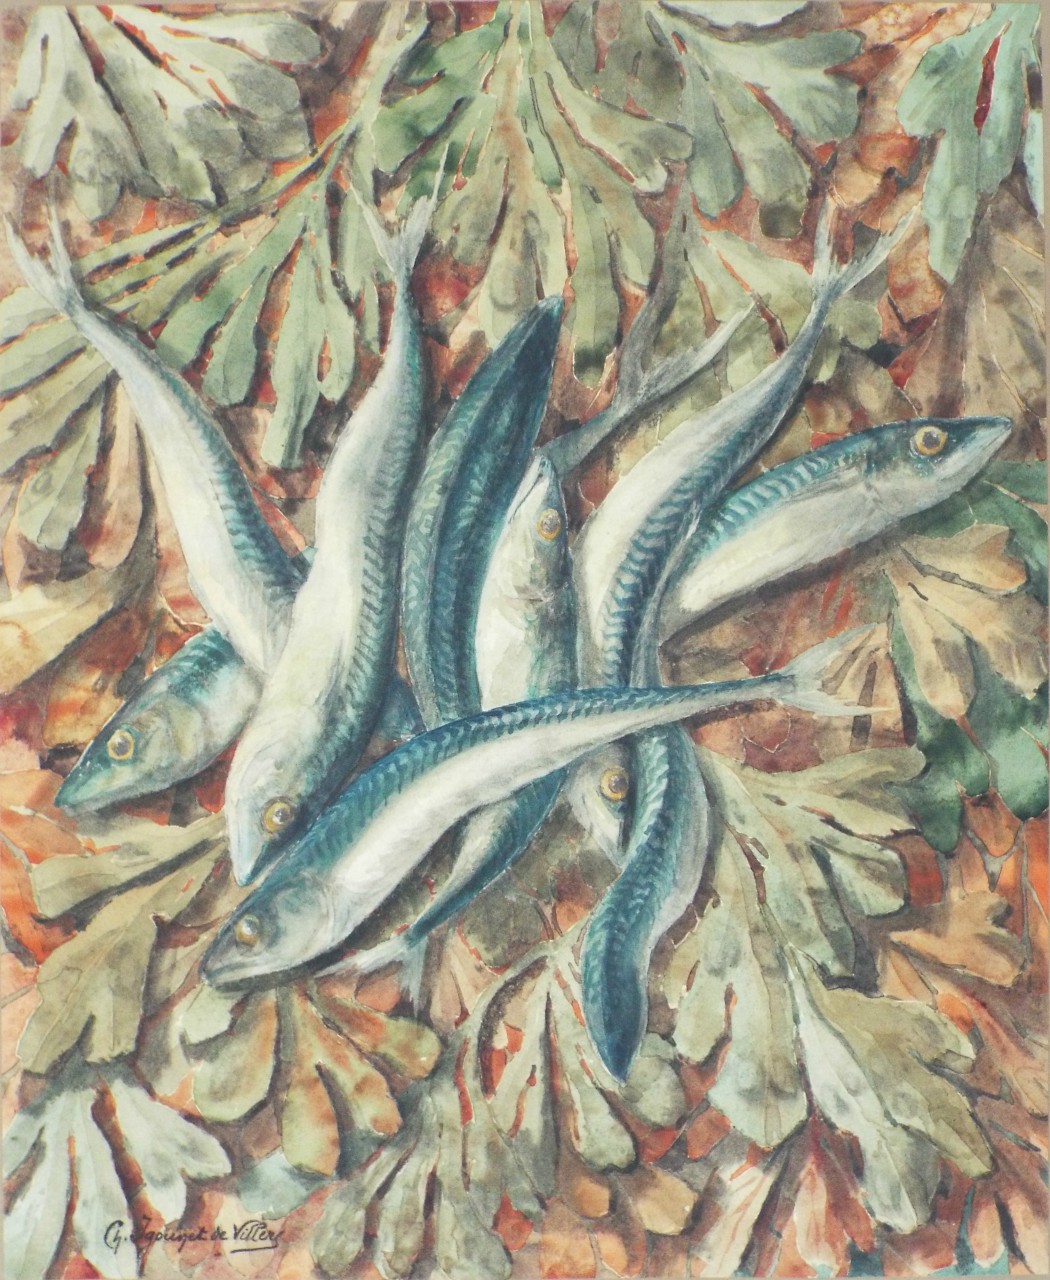 Watercolour - Les Sardines